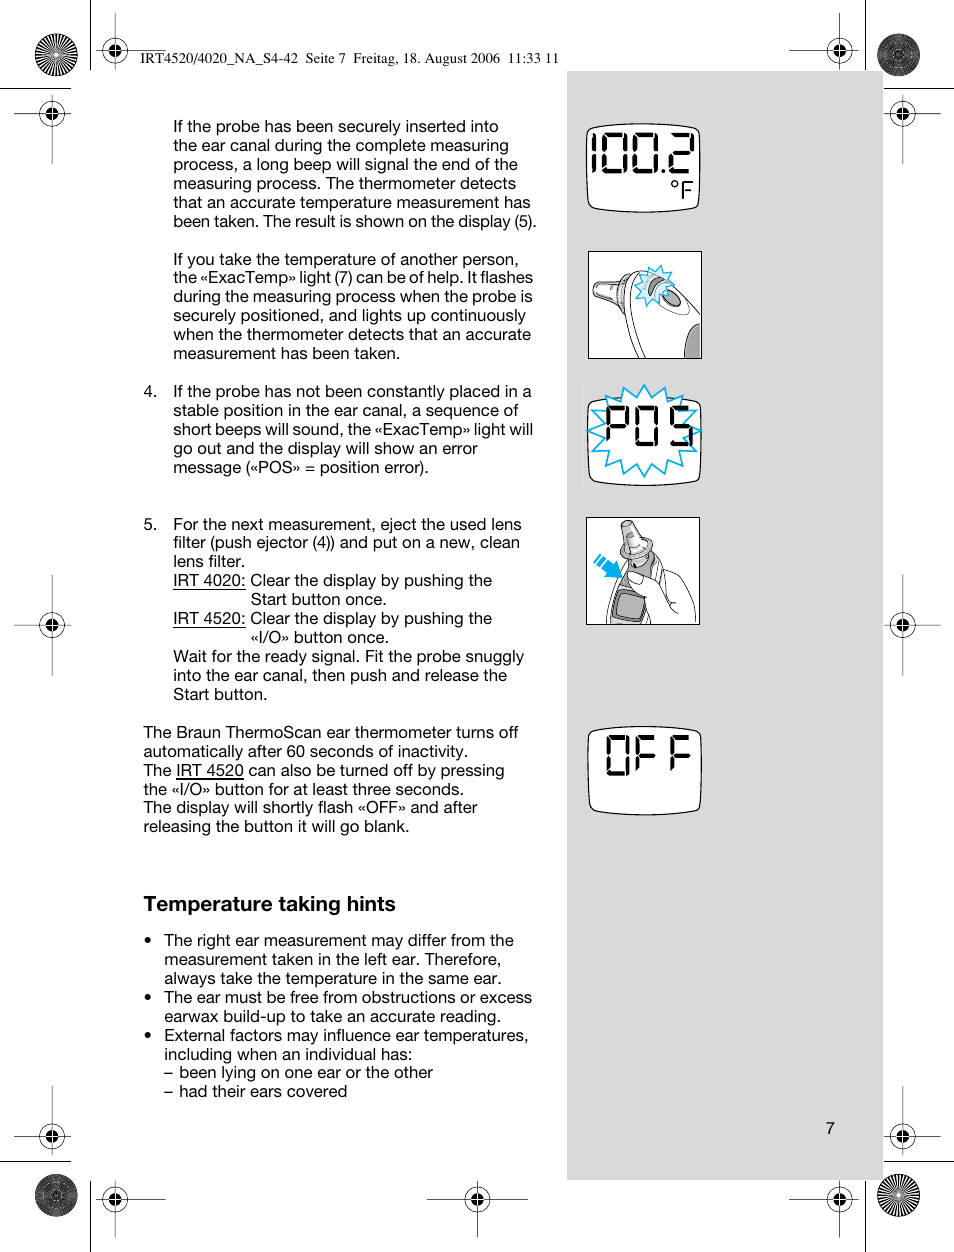 Temperature taking hints | Braun ThermoScan IRT 4520 User Manual | Page 7 /  42 | Original mode